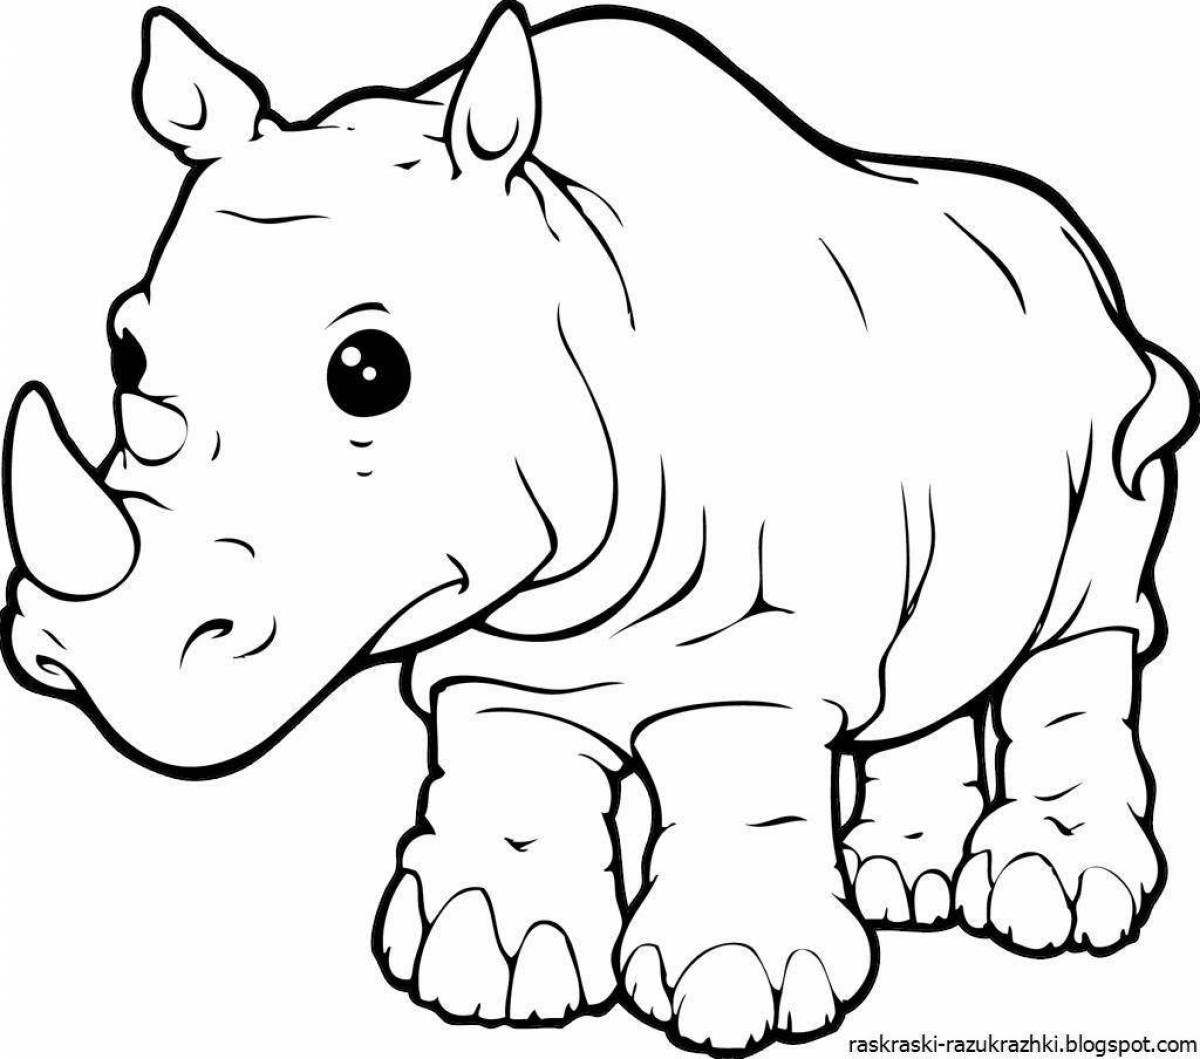 Fabulous rhinoceros coloring book for kids